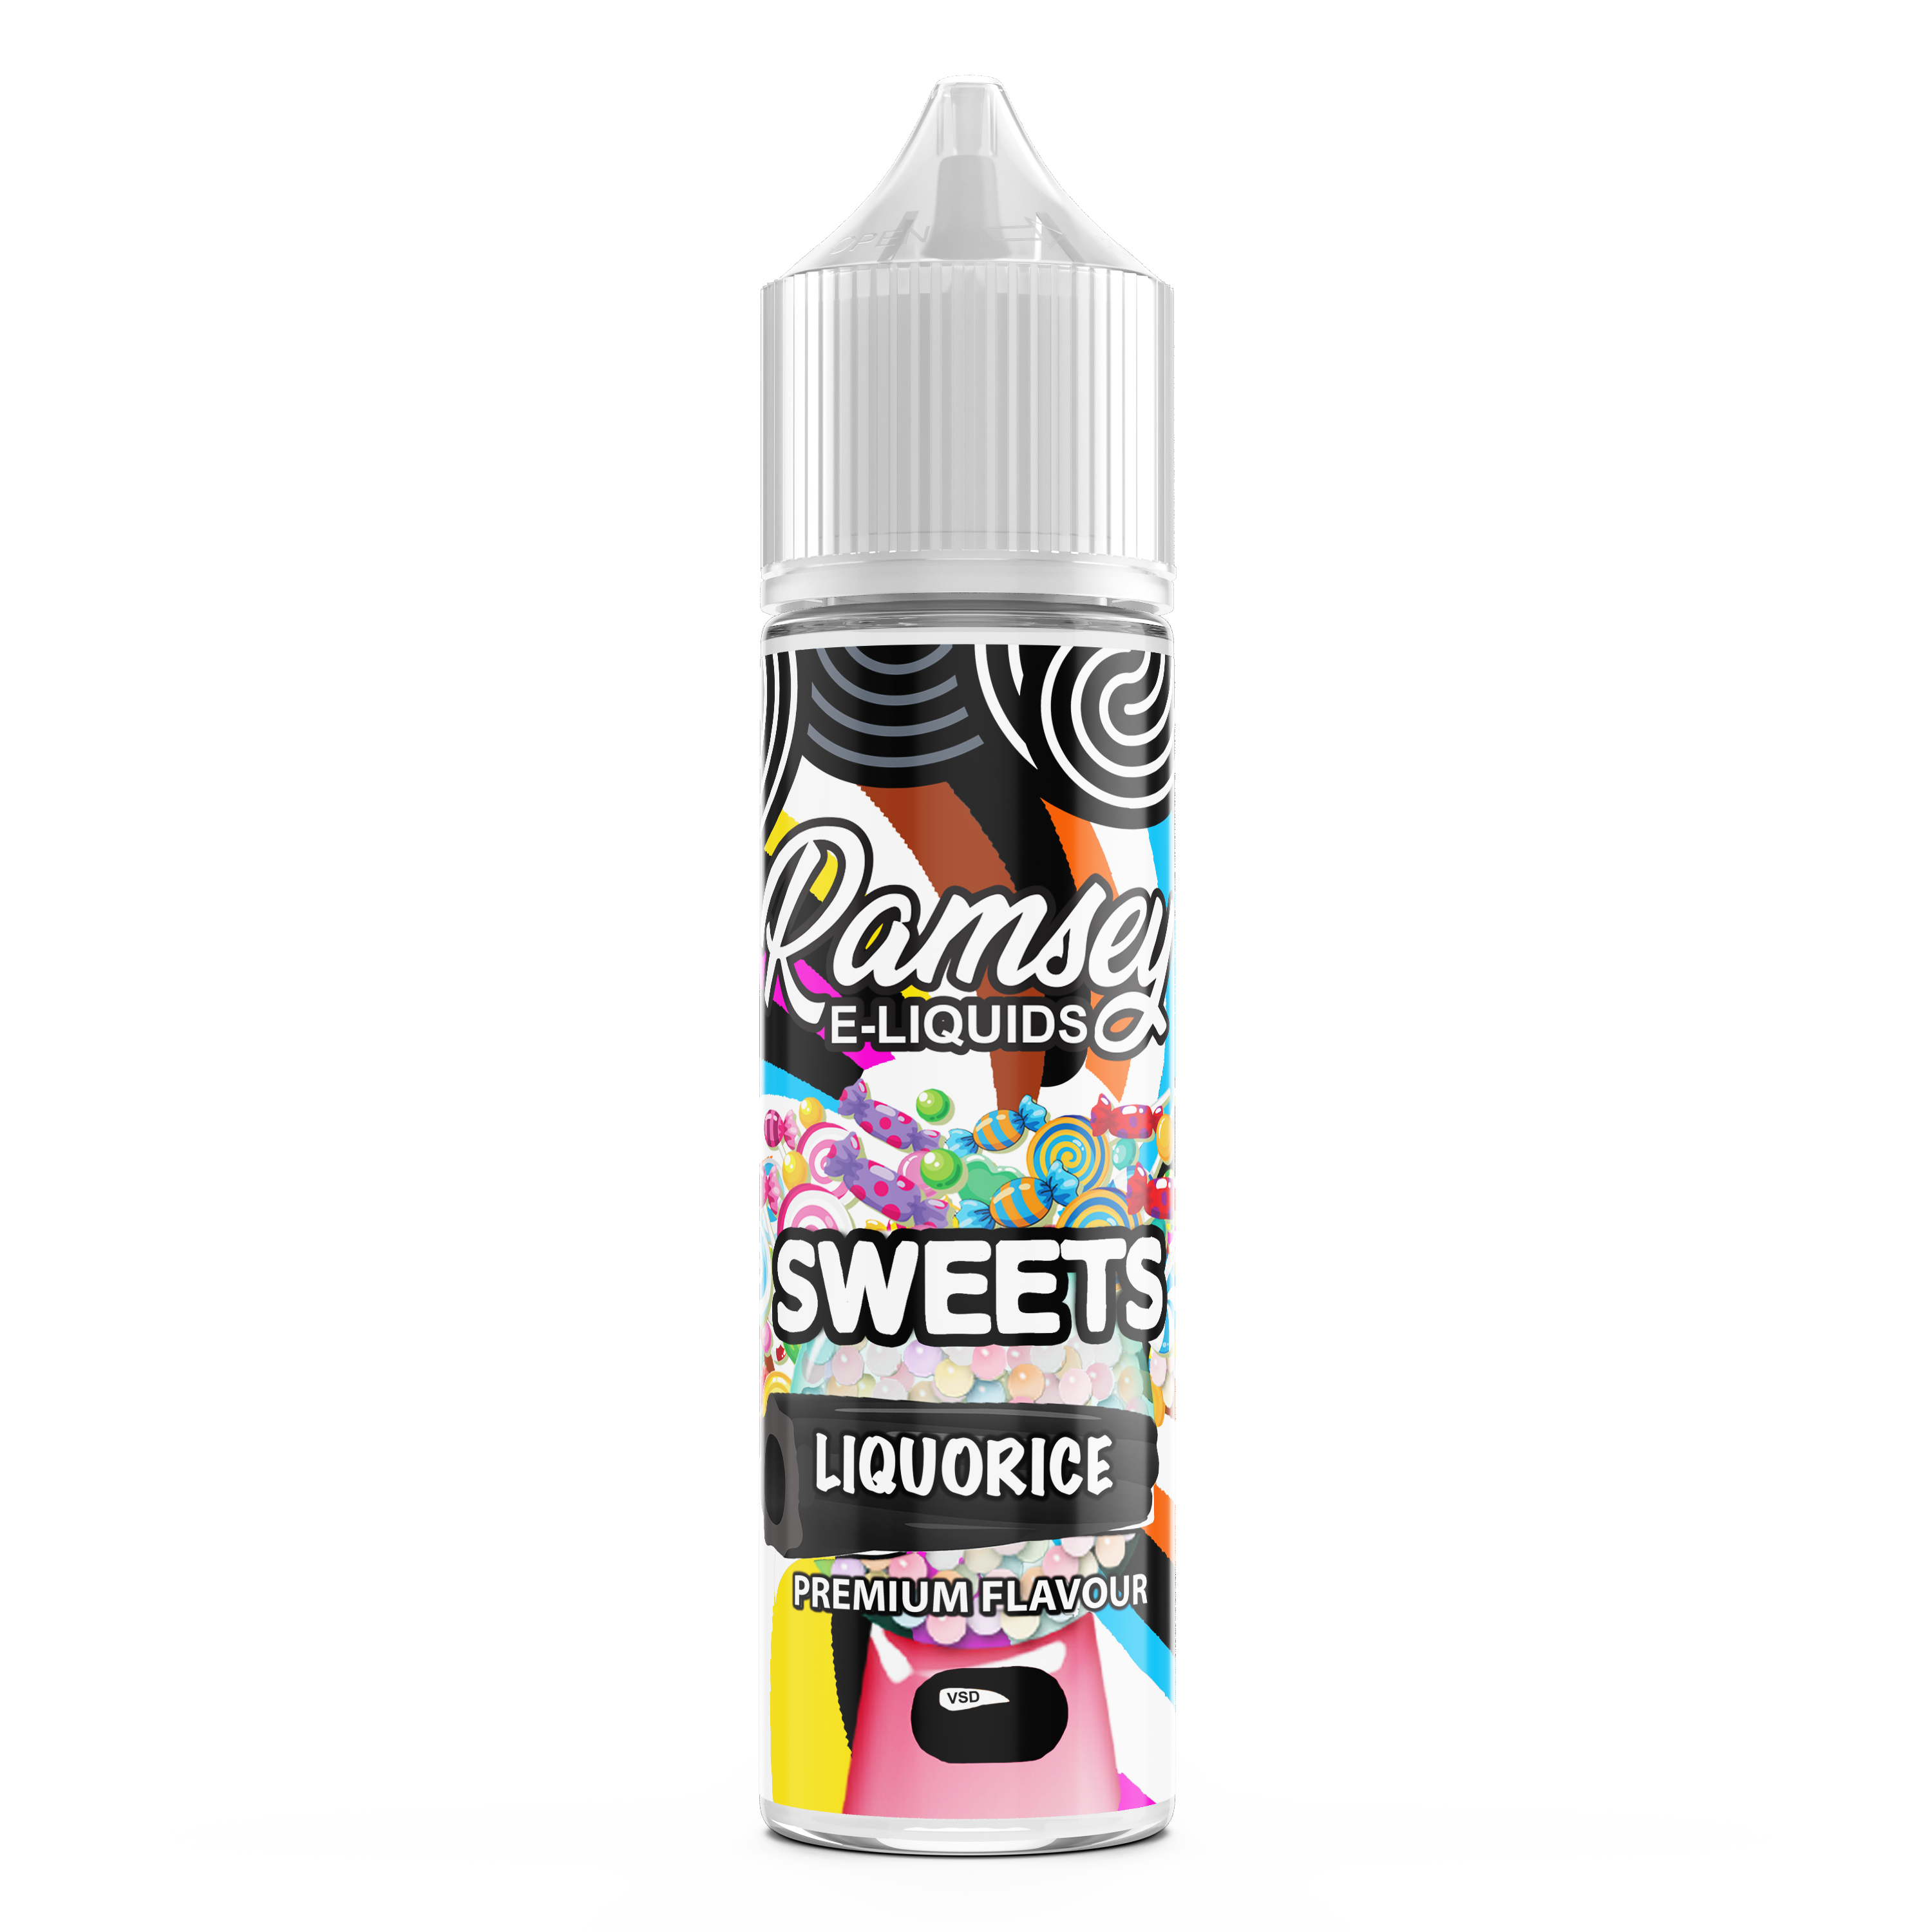 Ramsey E-Liquids Sweets: Licorice 0mg 50ml Shortfill E-Liquid